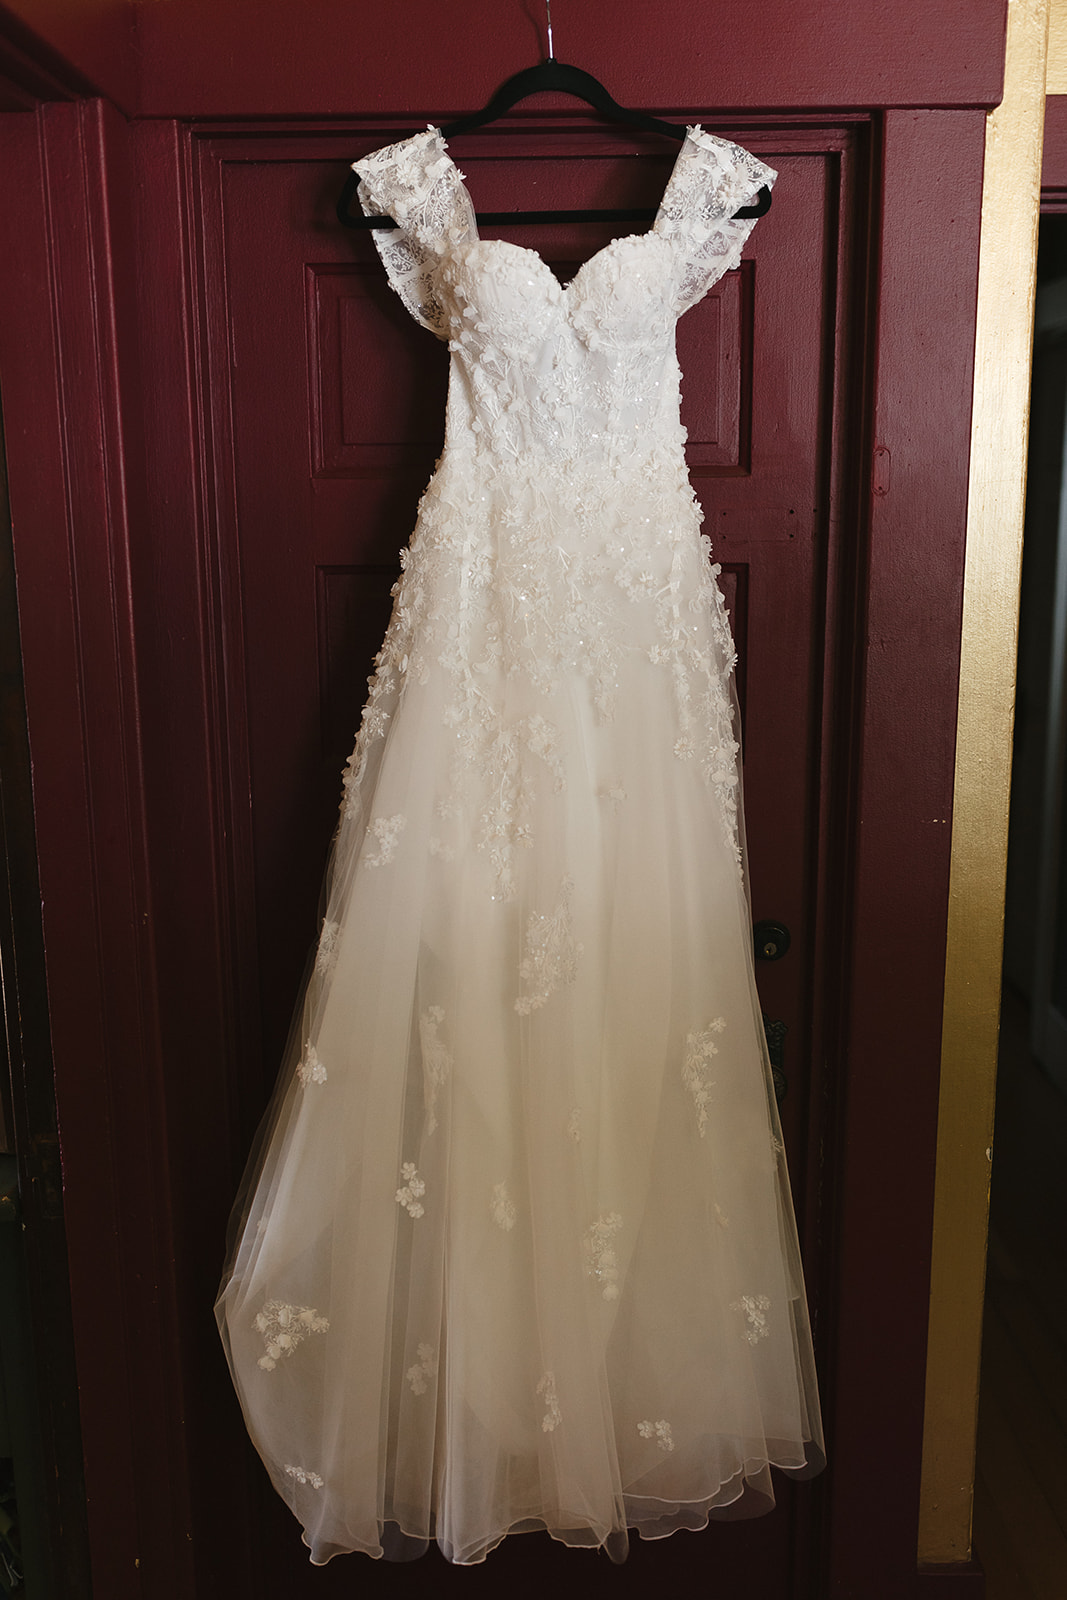 Wedding dress hanging on a doorway